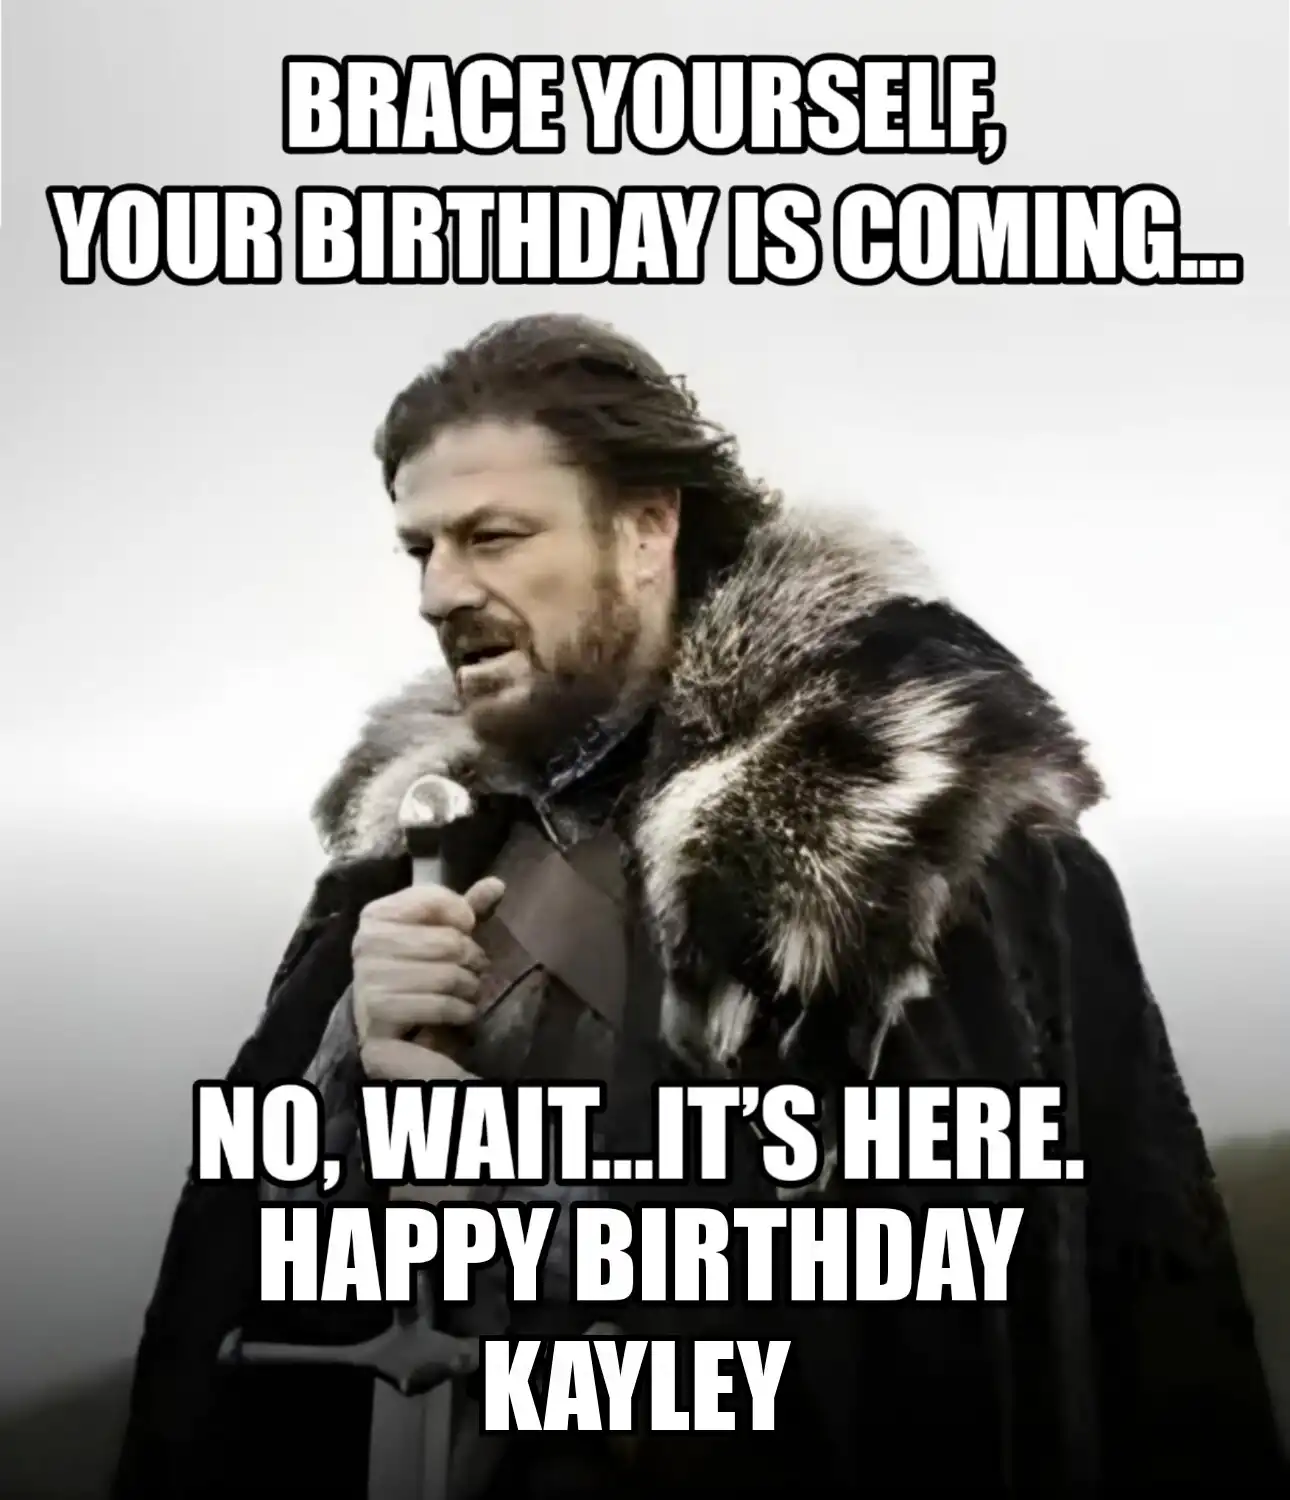 Happy Birthday Kayley Brace Yourself Your Birthday Is Coming Meme